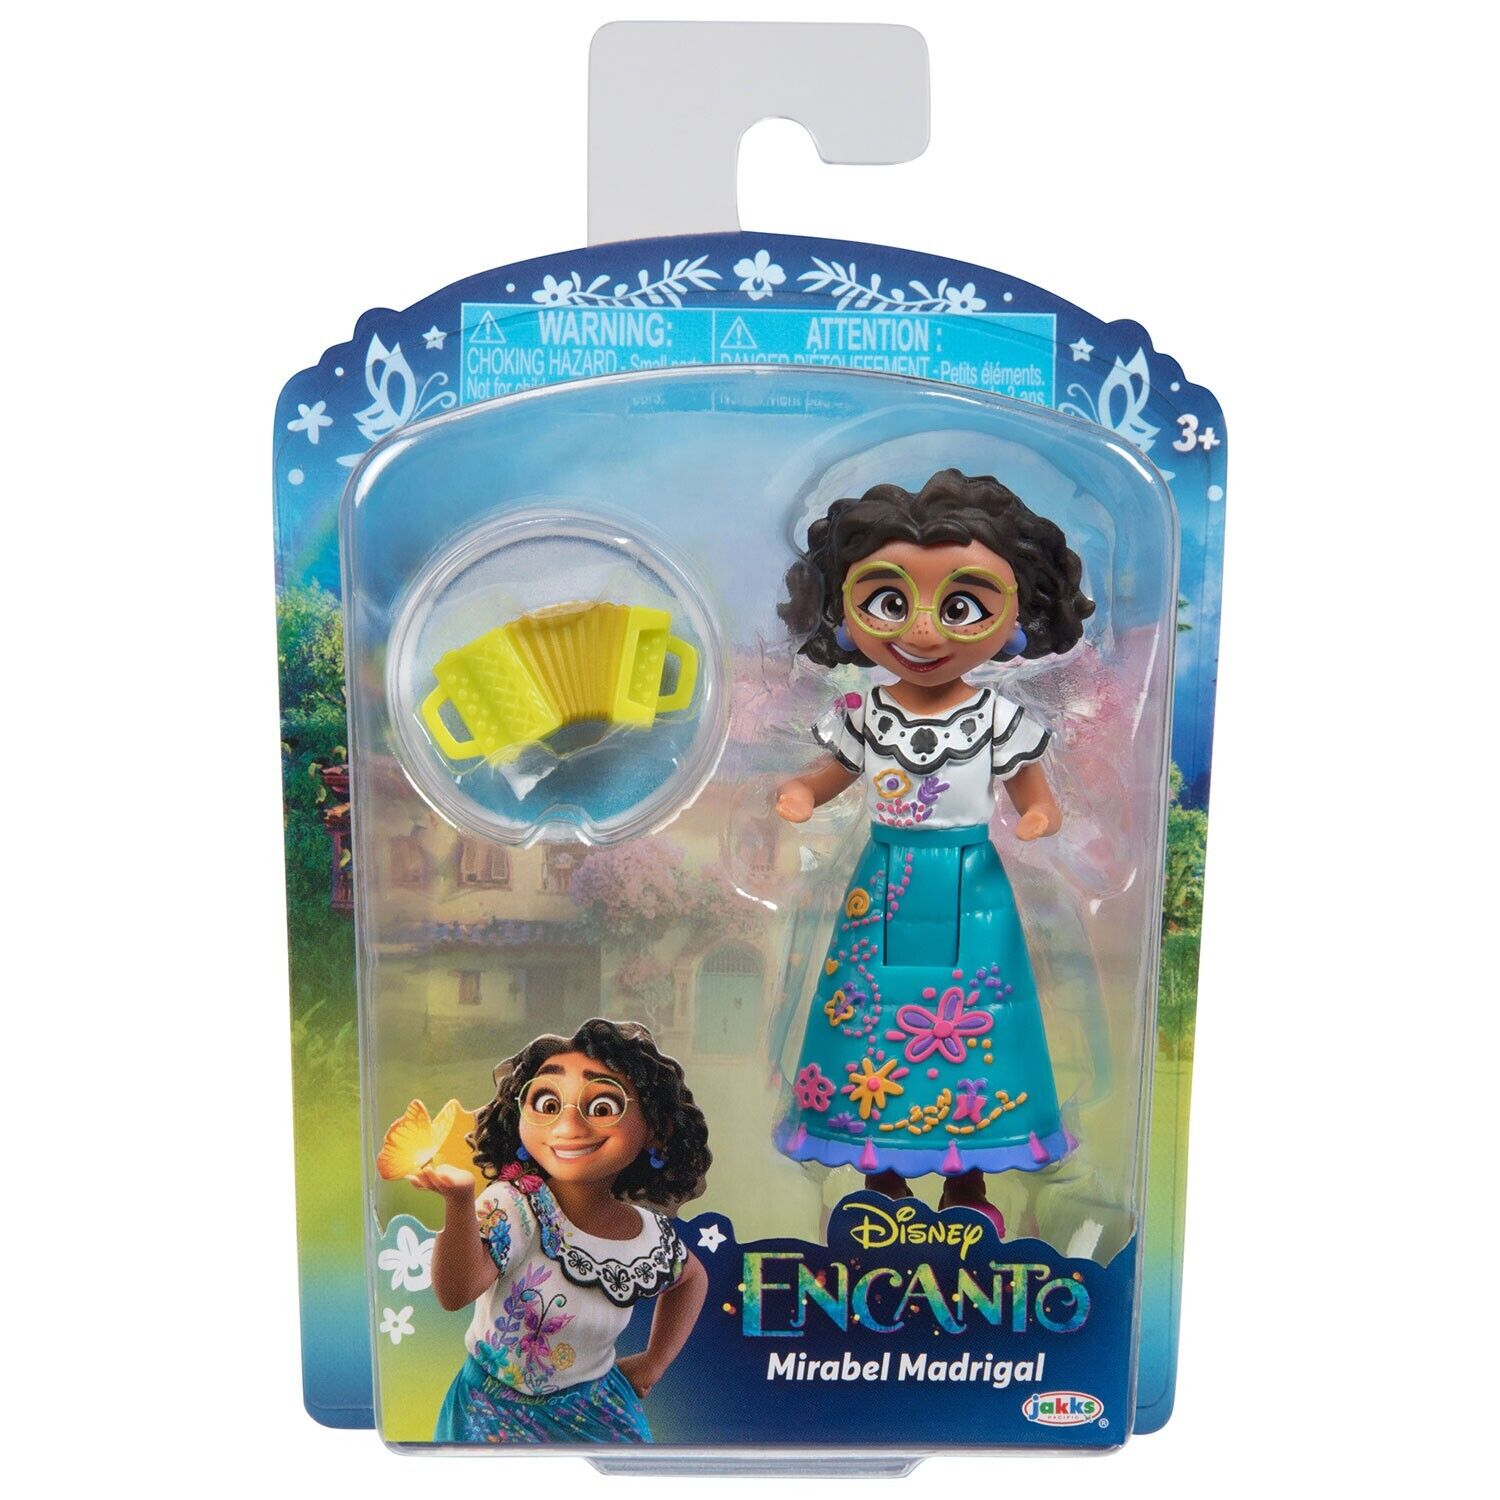 "Disney Encanto Mirabel Madrigal 3" Small Doll - Brand New"